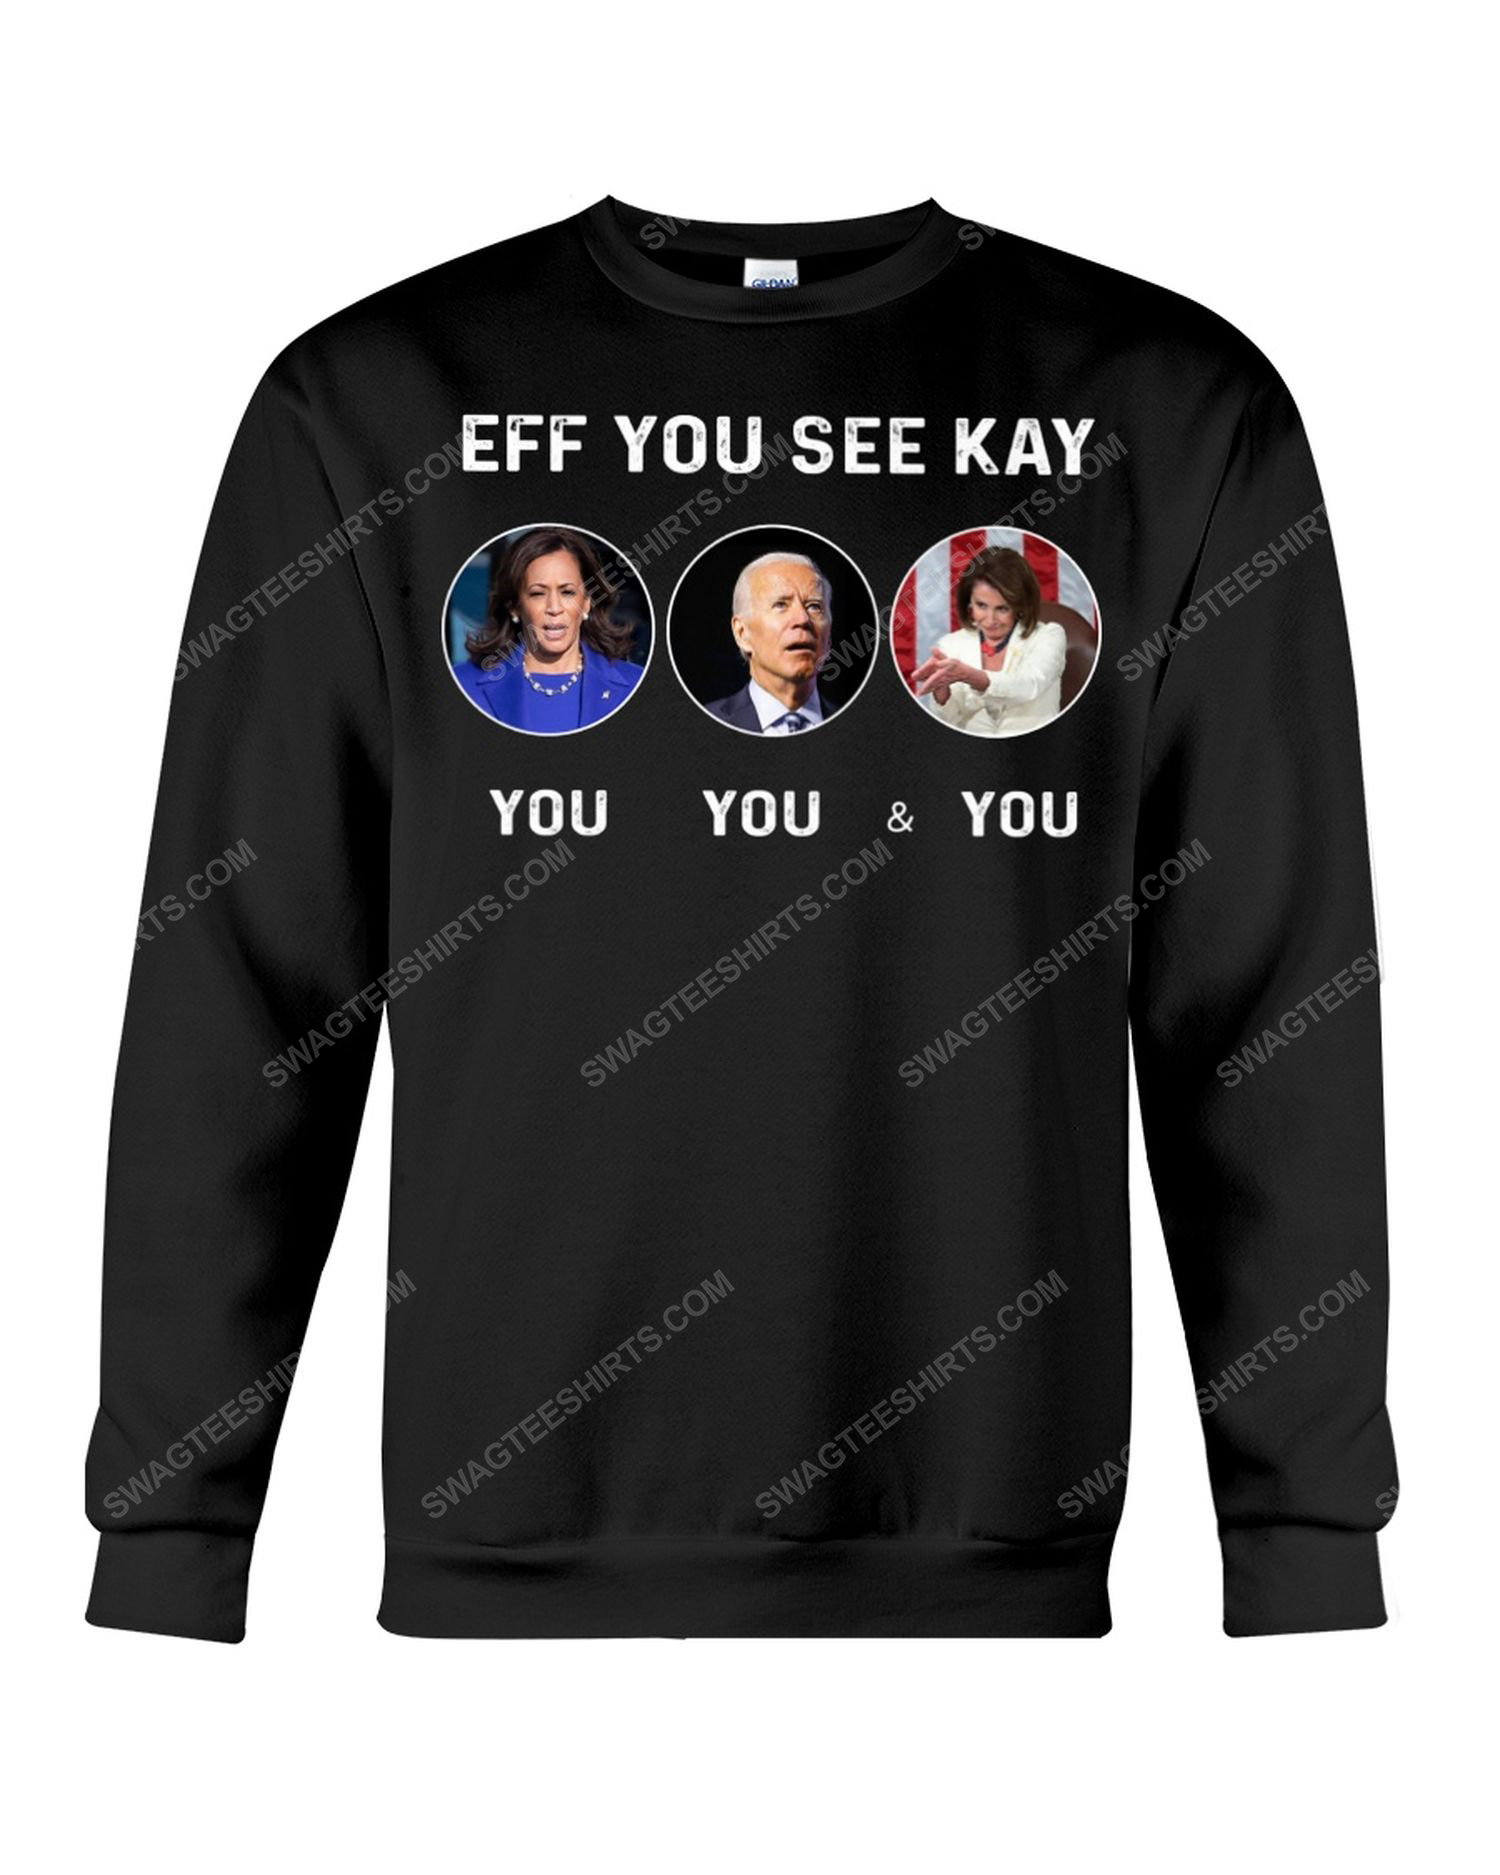 EFF you see kay political sweatshirt